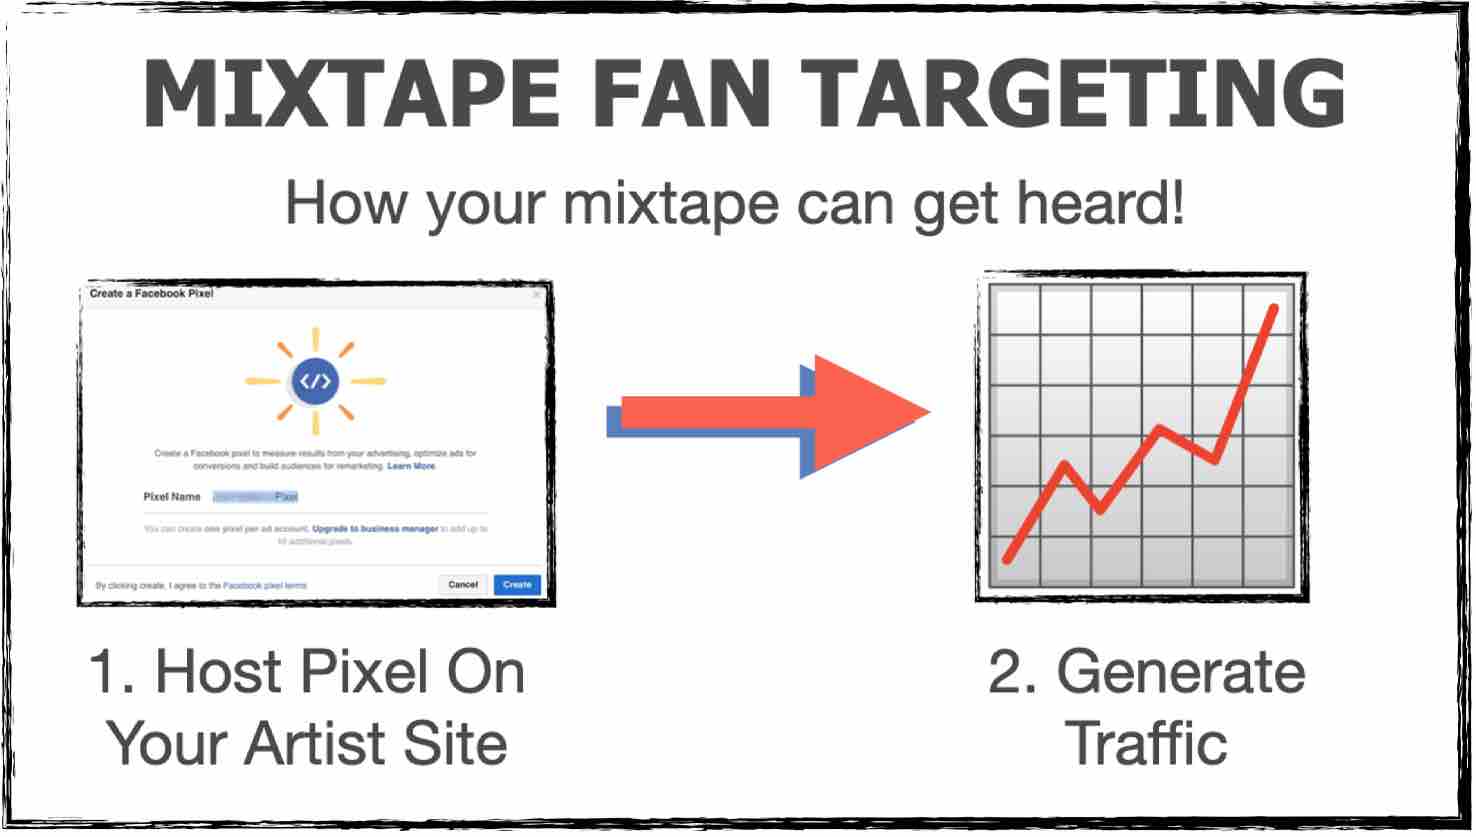 Mixtape fan targeting with Facebook pixel